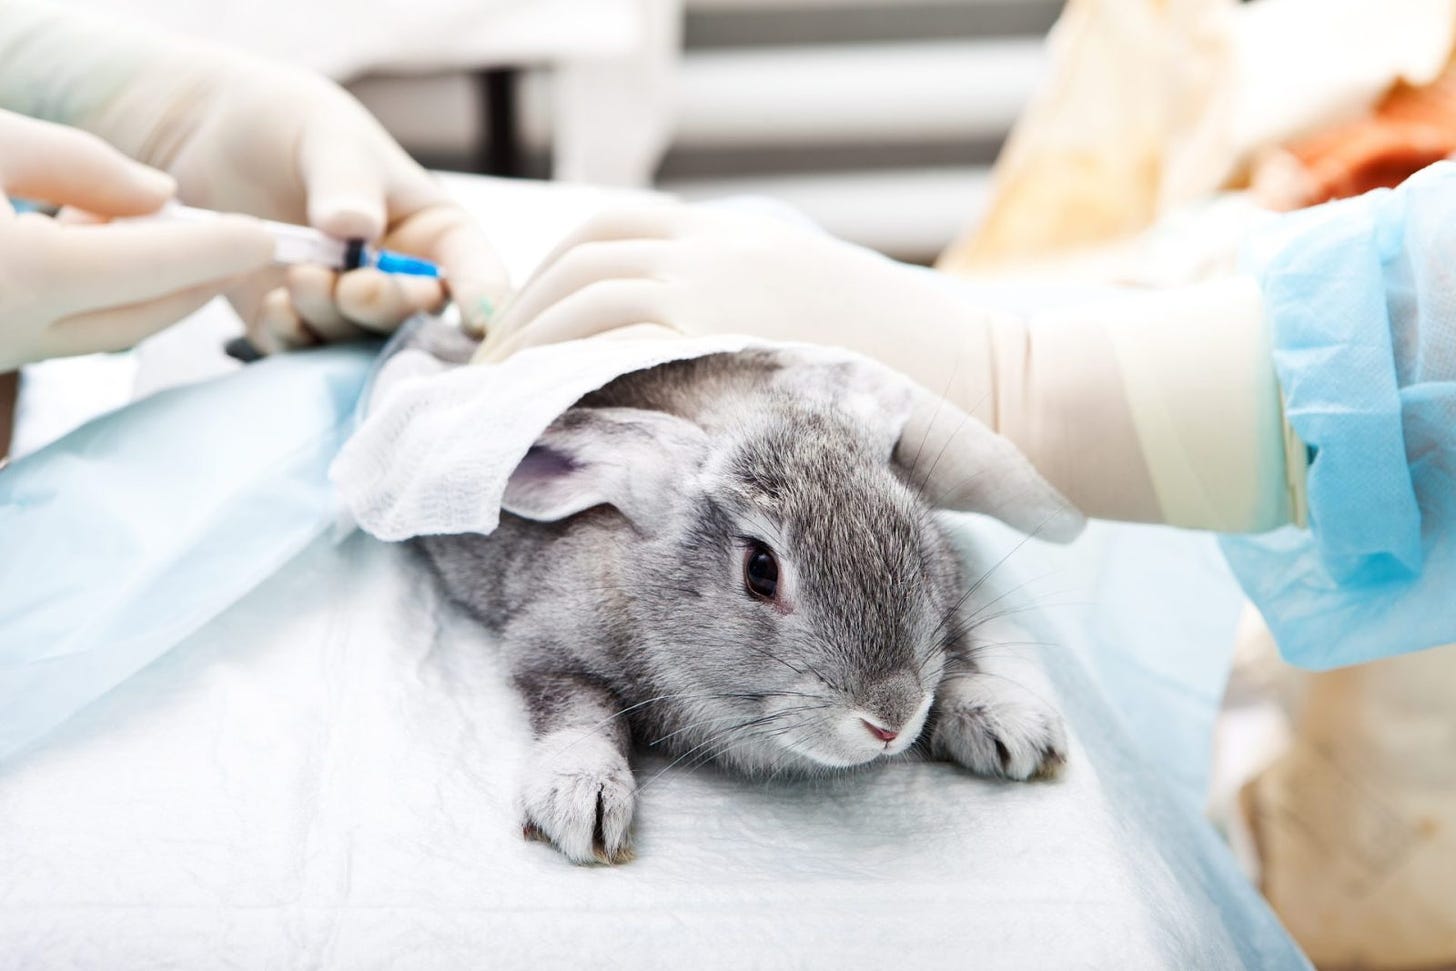 FDA Modernization Act 3.0 Introduced to Reform Animal Testing